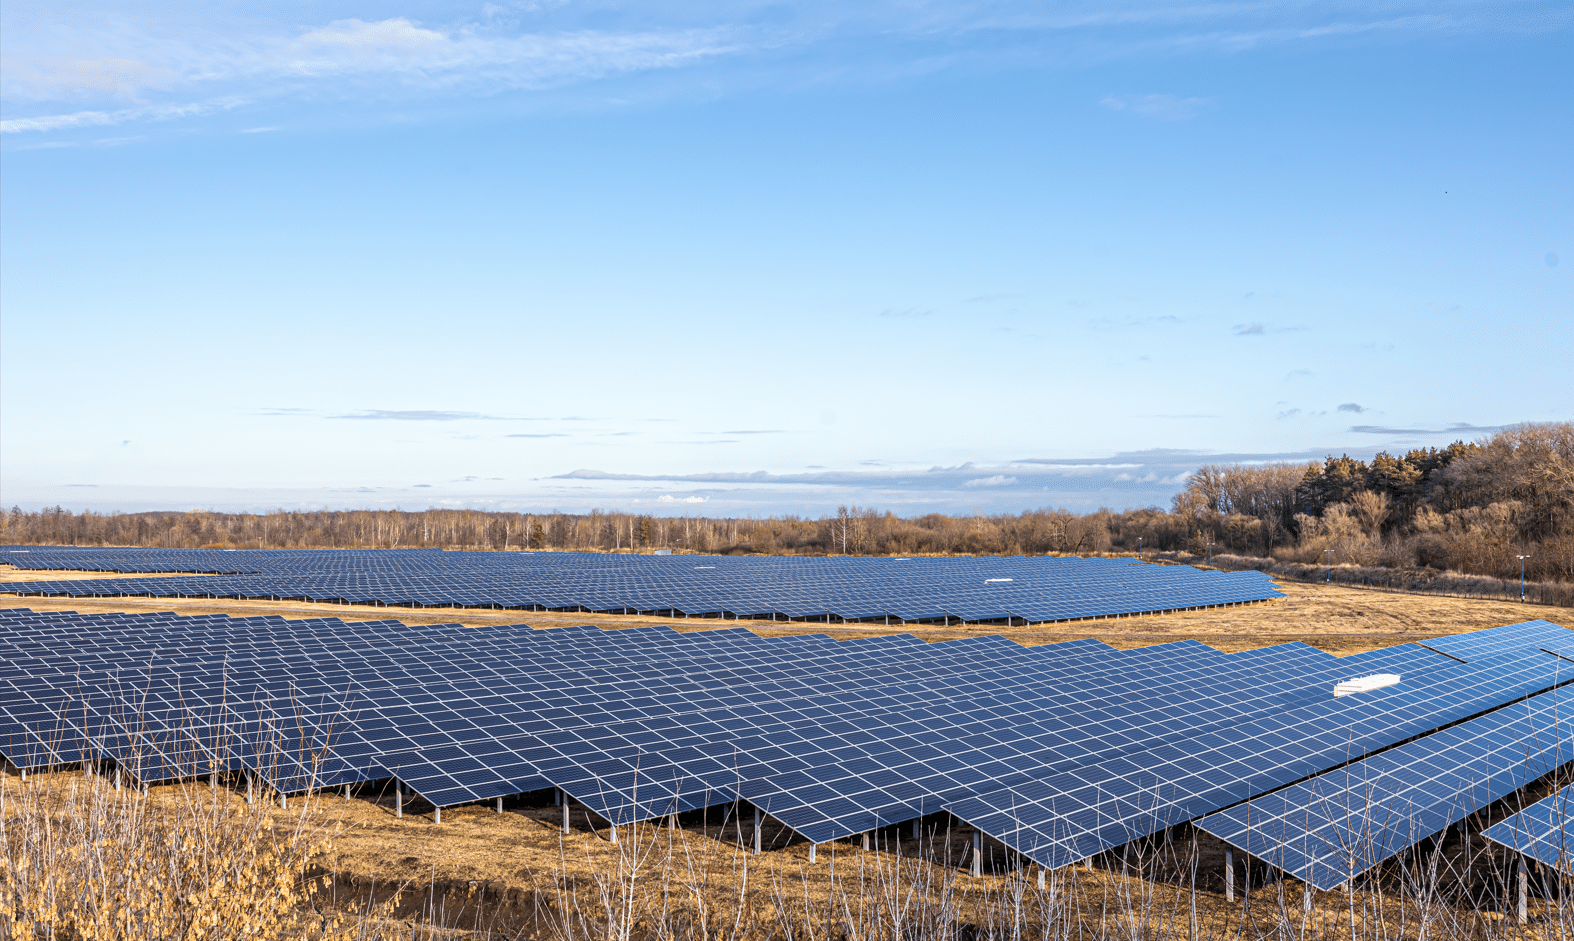 Solar Energy Development in Africa